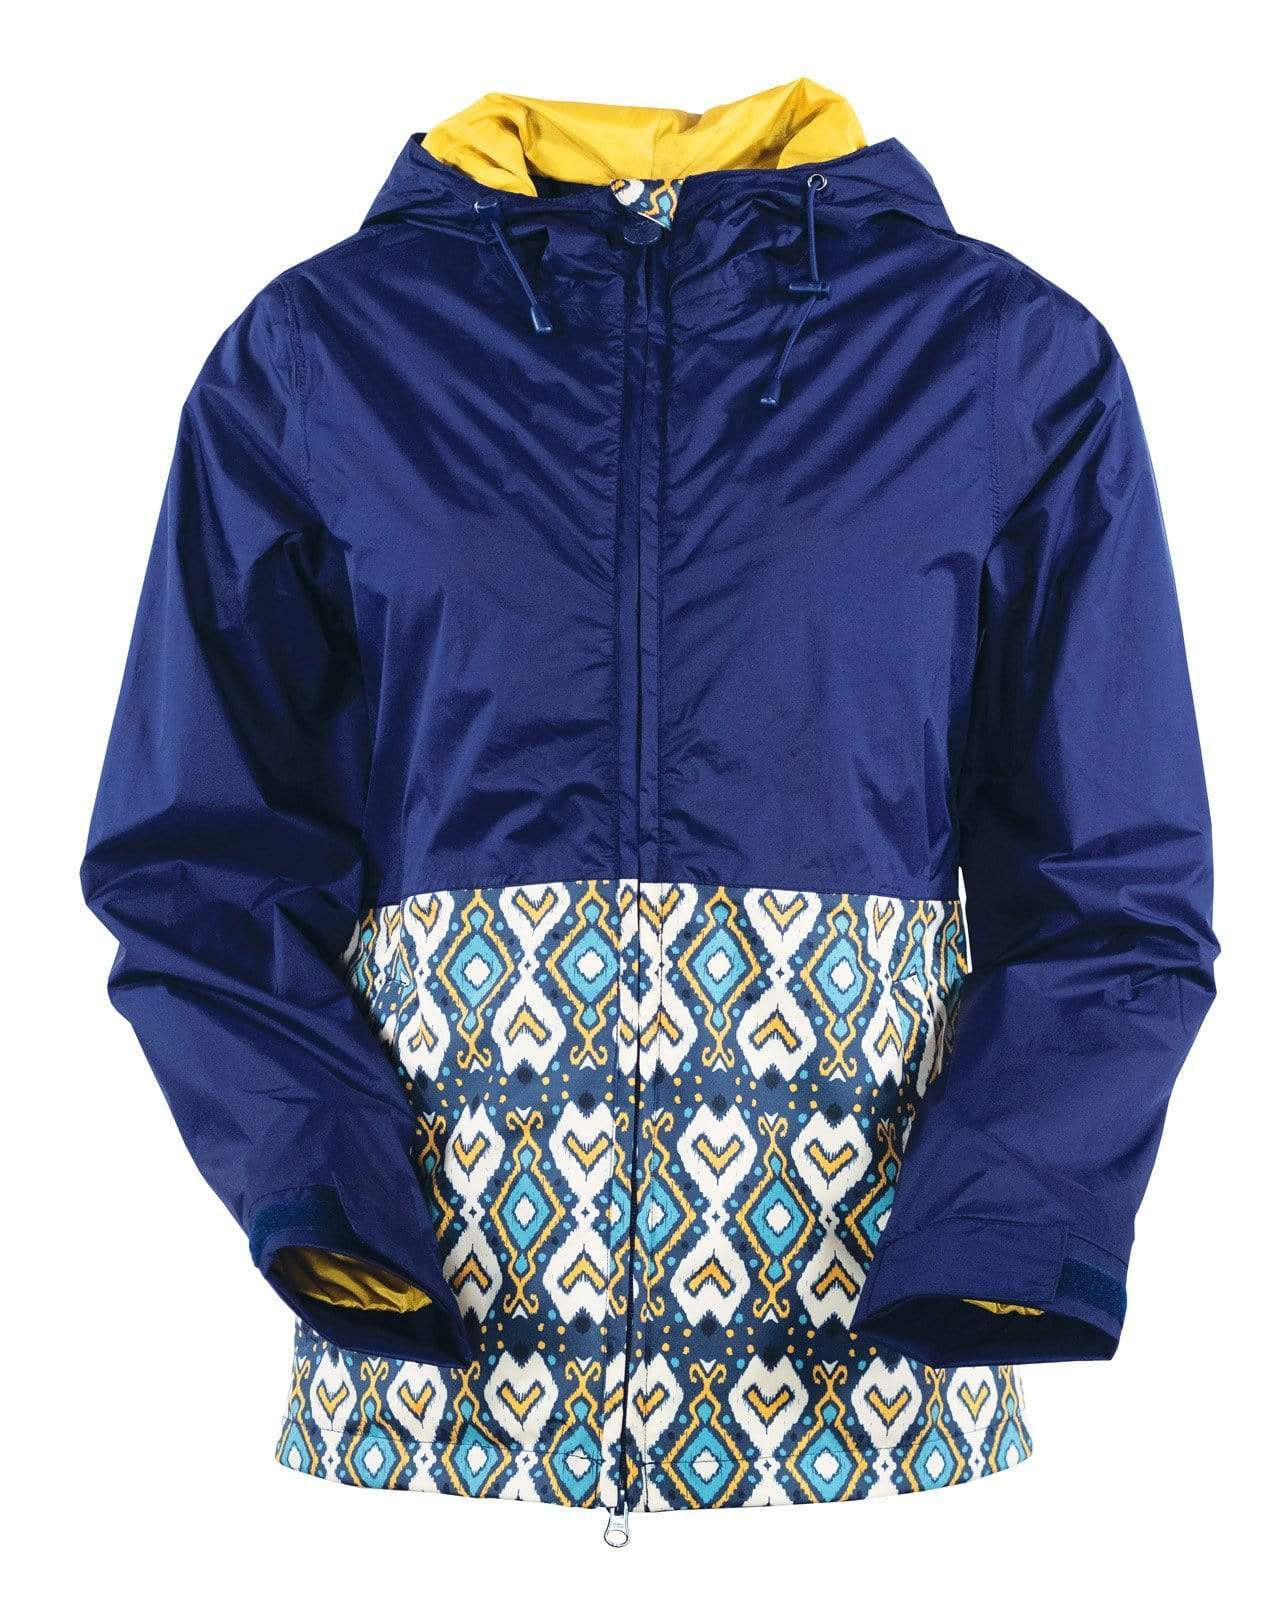 Outback Trading Company Women’s Agetha Jacket Steel Blue / S 30319-STB-SM 789043389319 Coats & Jackets